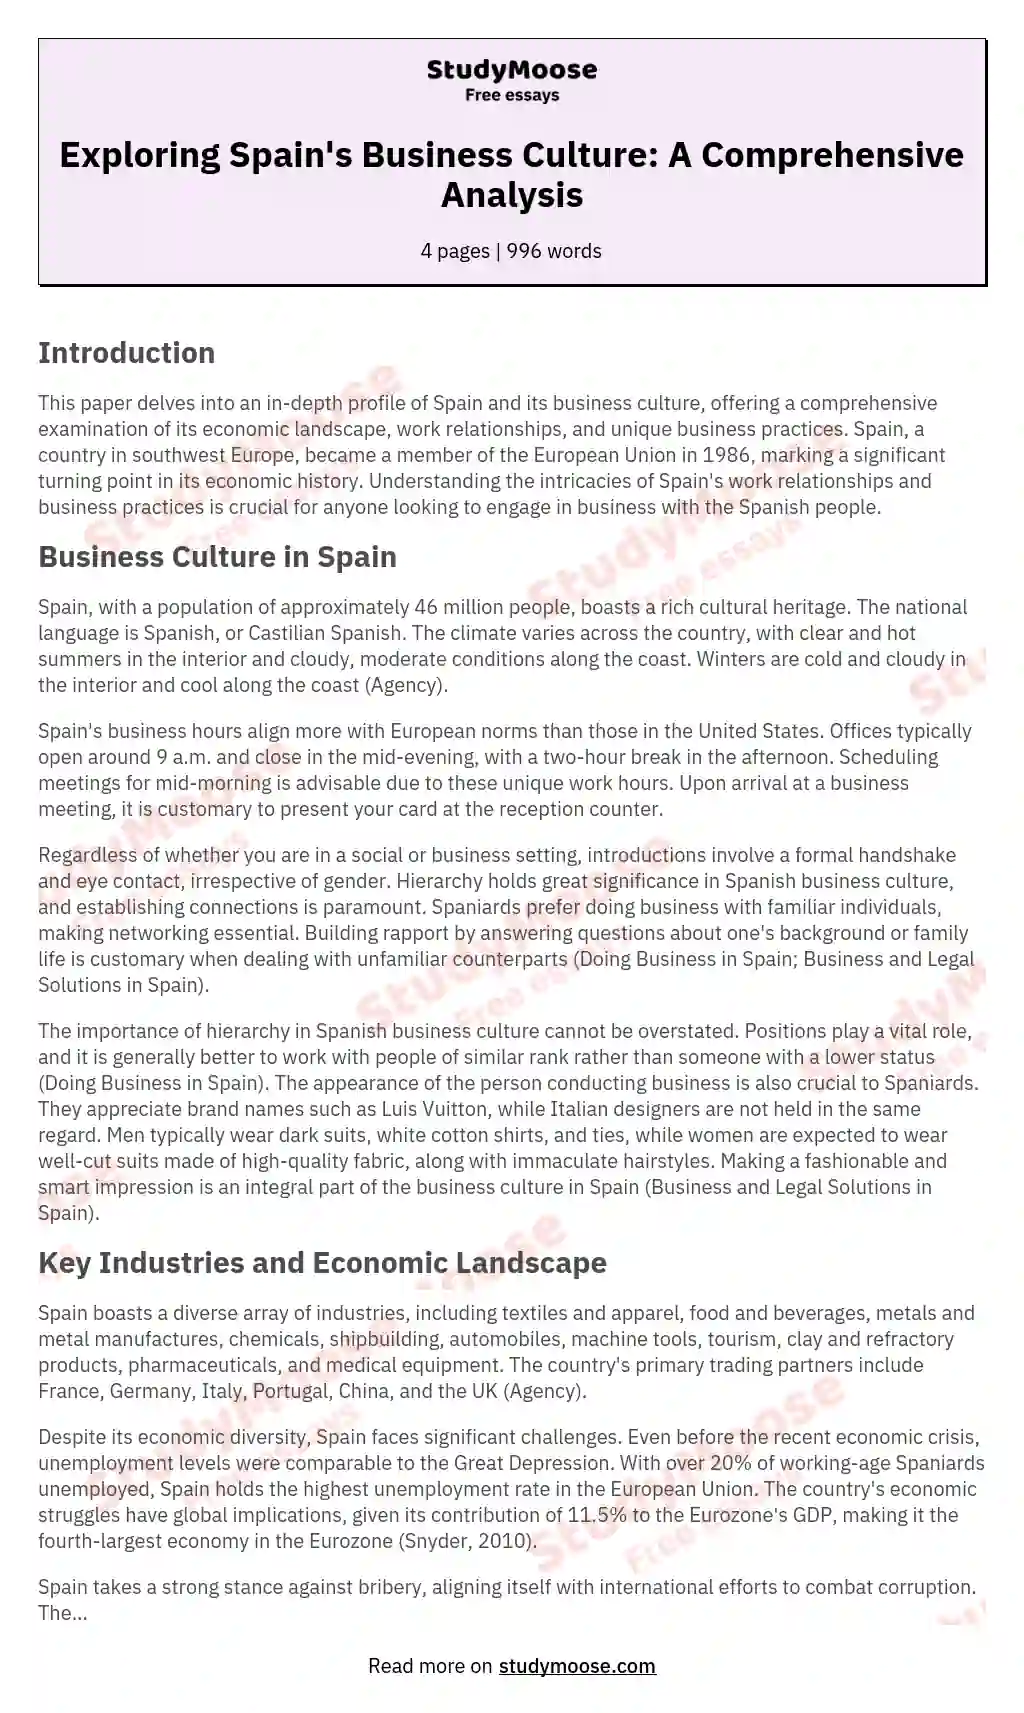 Business Culture in Spain